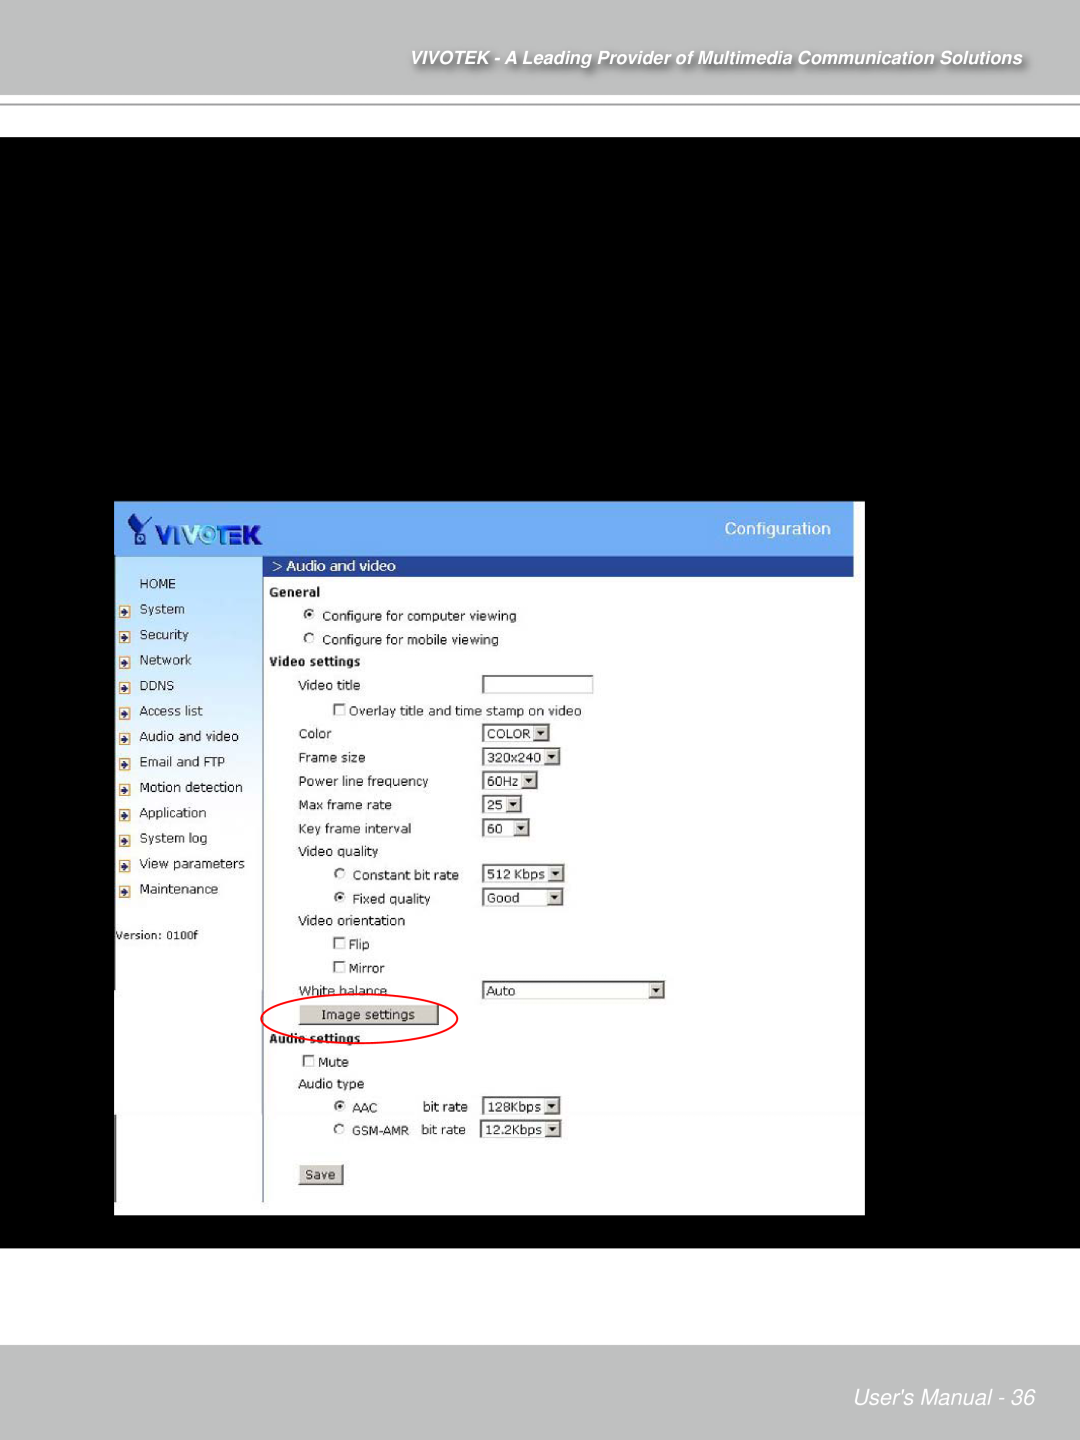 Vivotek IP7132 manual Audio settings, Users Manual 